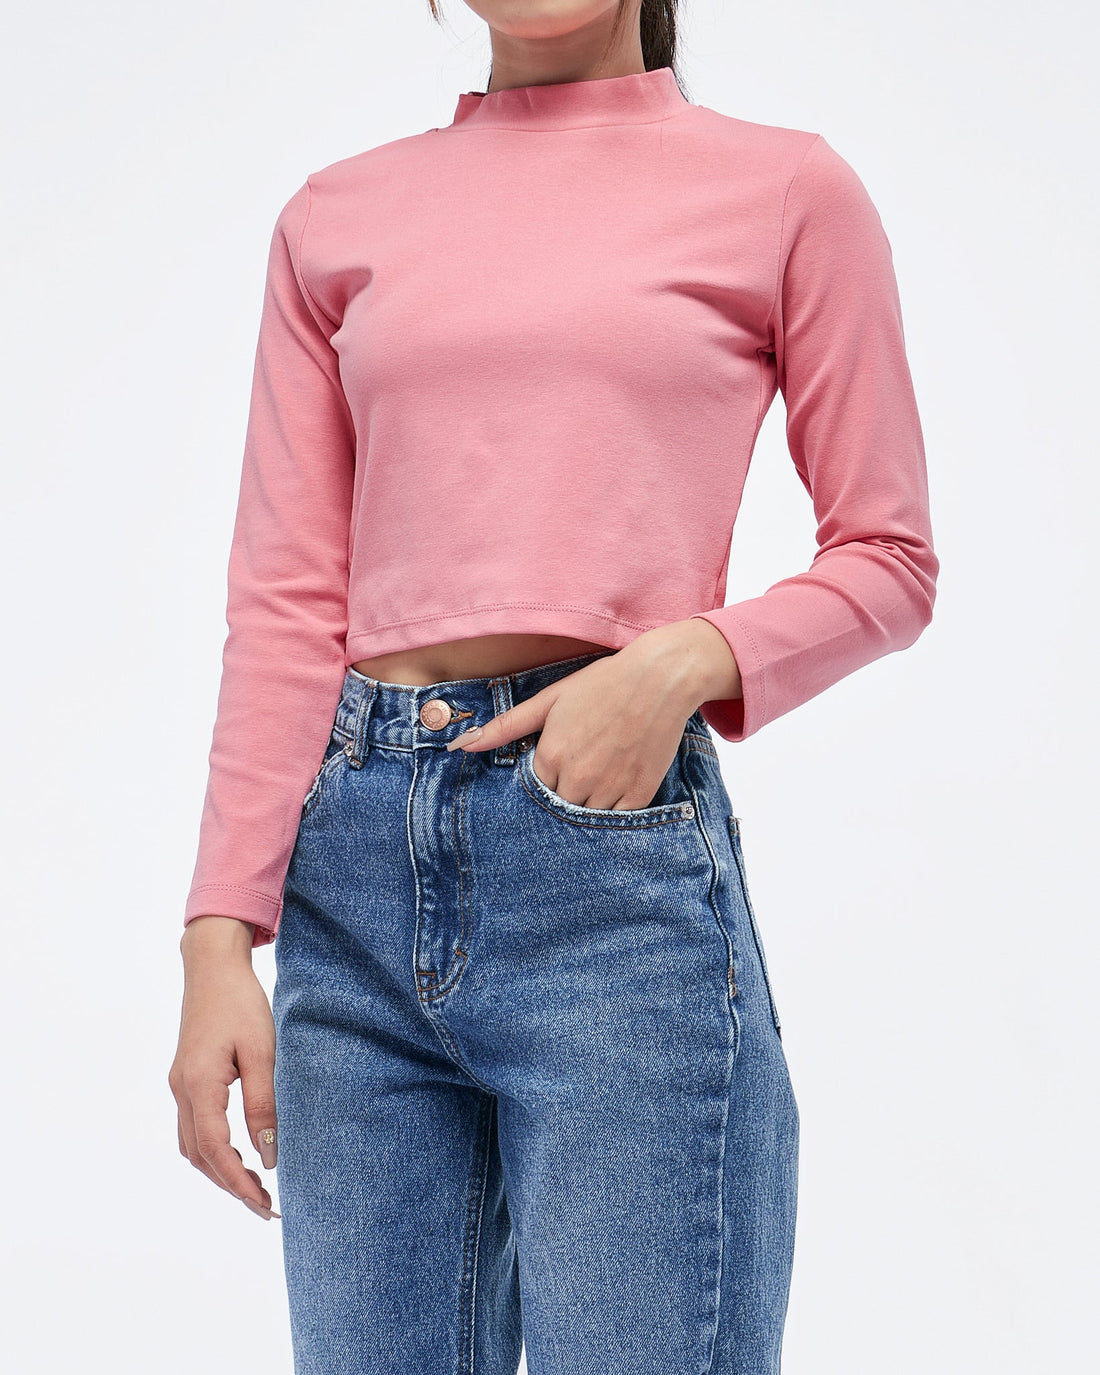 MOI OUTFIT-High Neck Plain Color Lady T-Shirt Long Sleeve 9.90